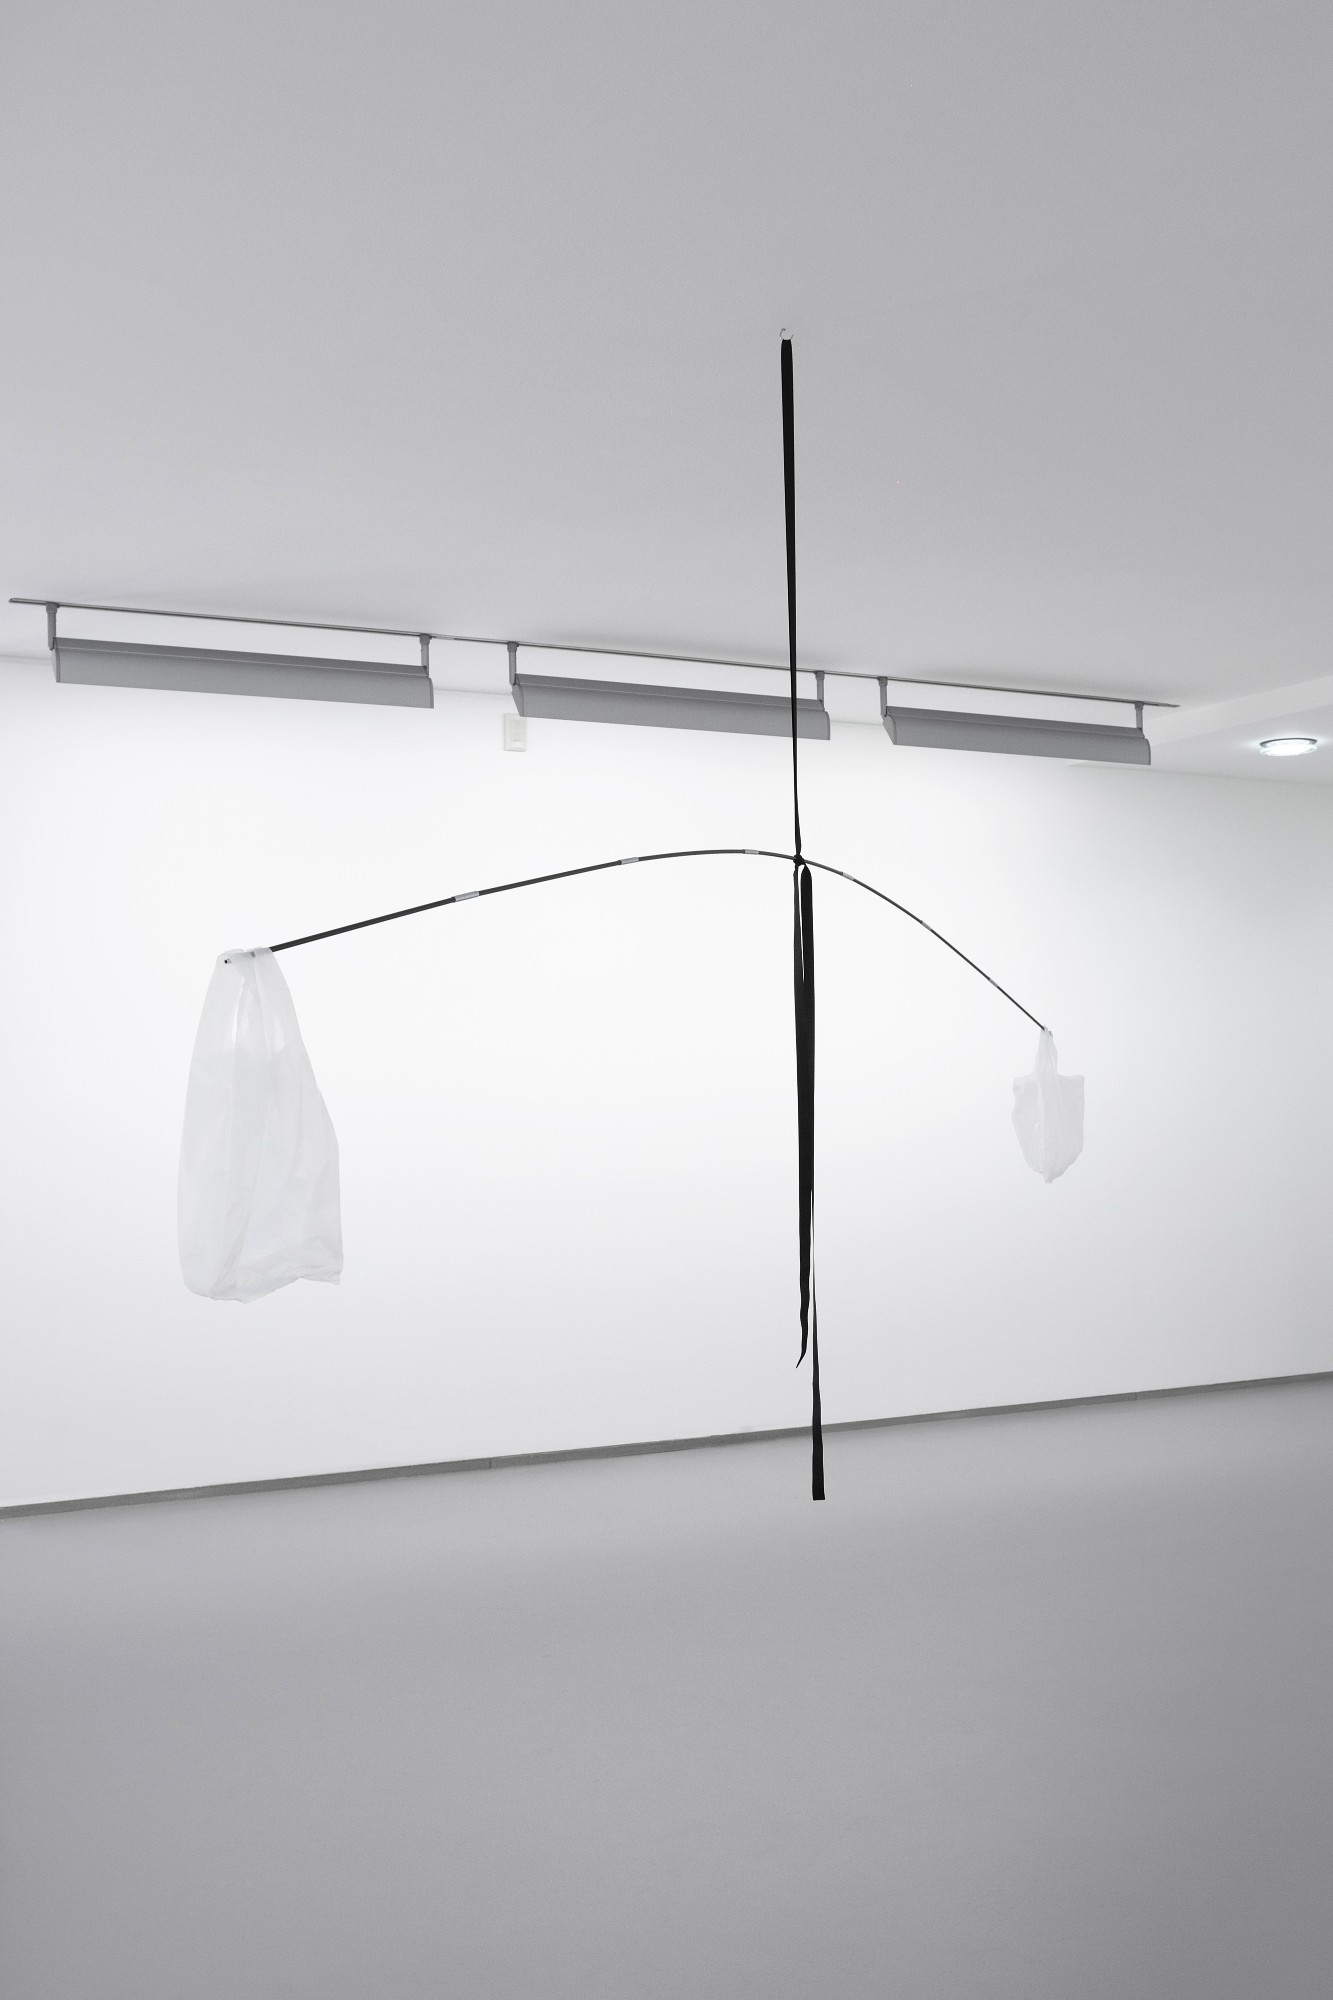 Anna Kolodziejska, Ohne Titel (Mobile), 2014, tent pole, plastic bags, hem tape, 230 x 280 x 20 cm